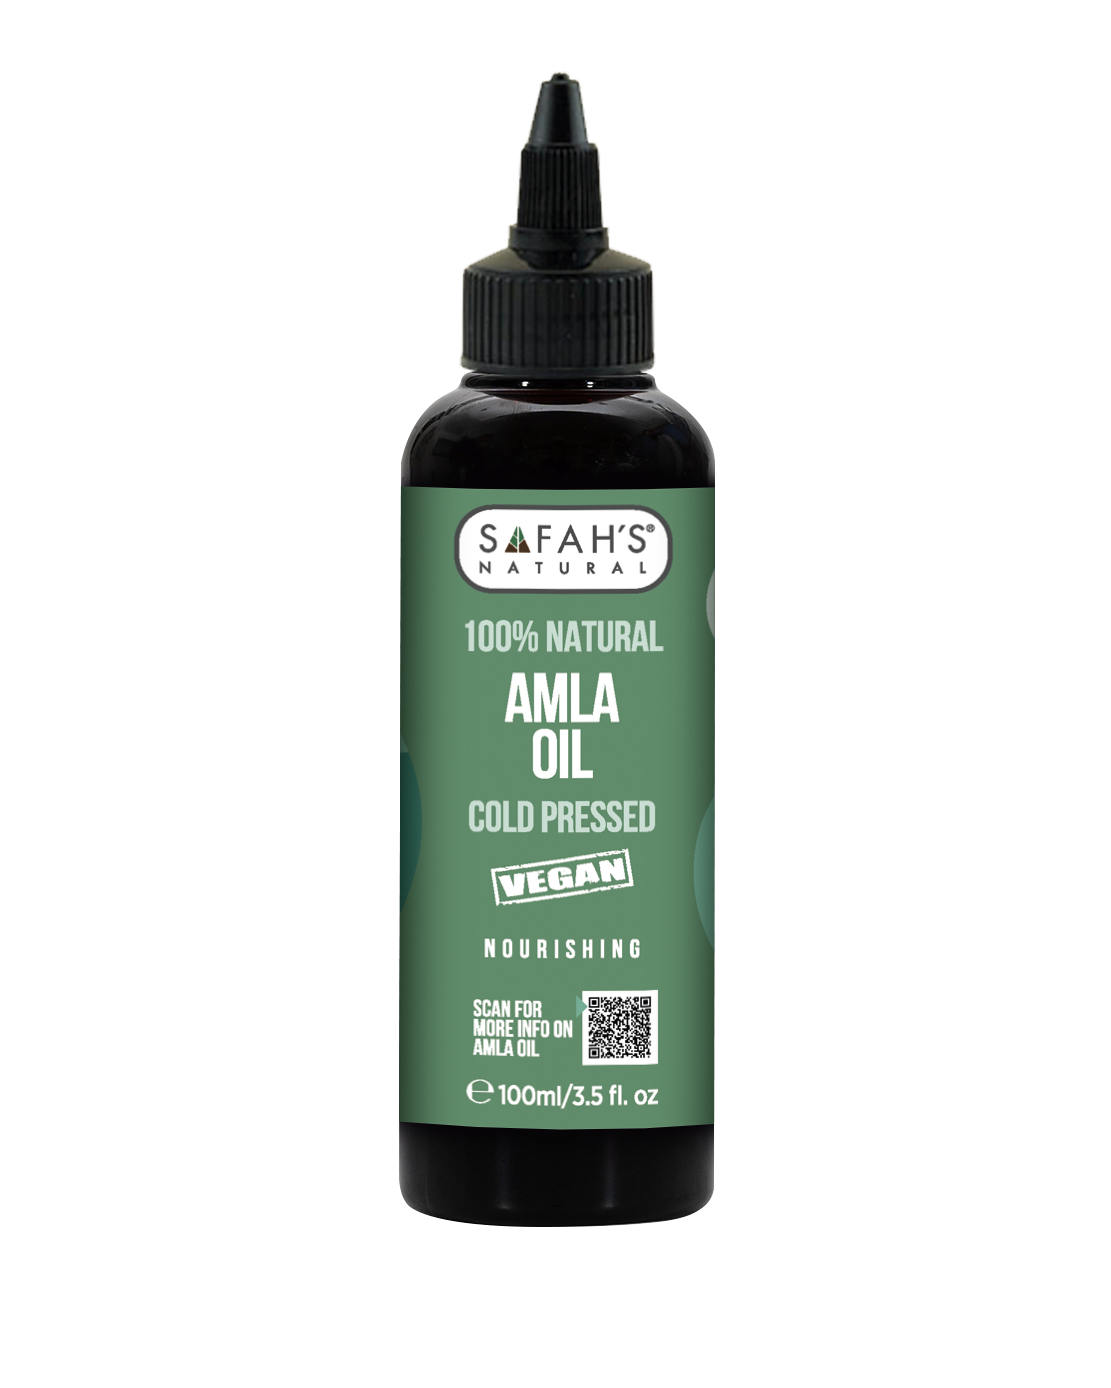 Amla oil 100% Natural - for Vibrant Growth & Shine